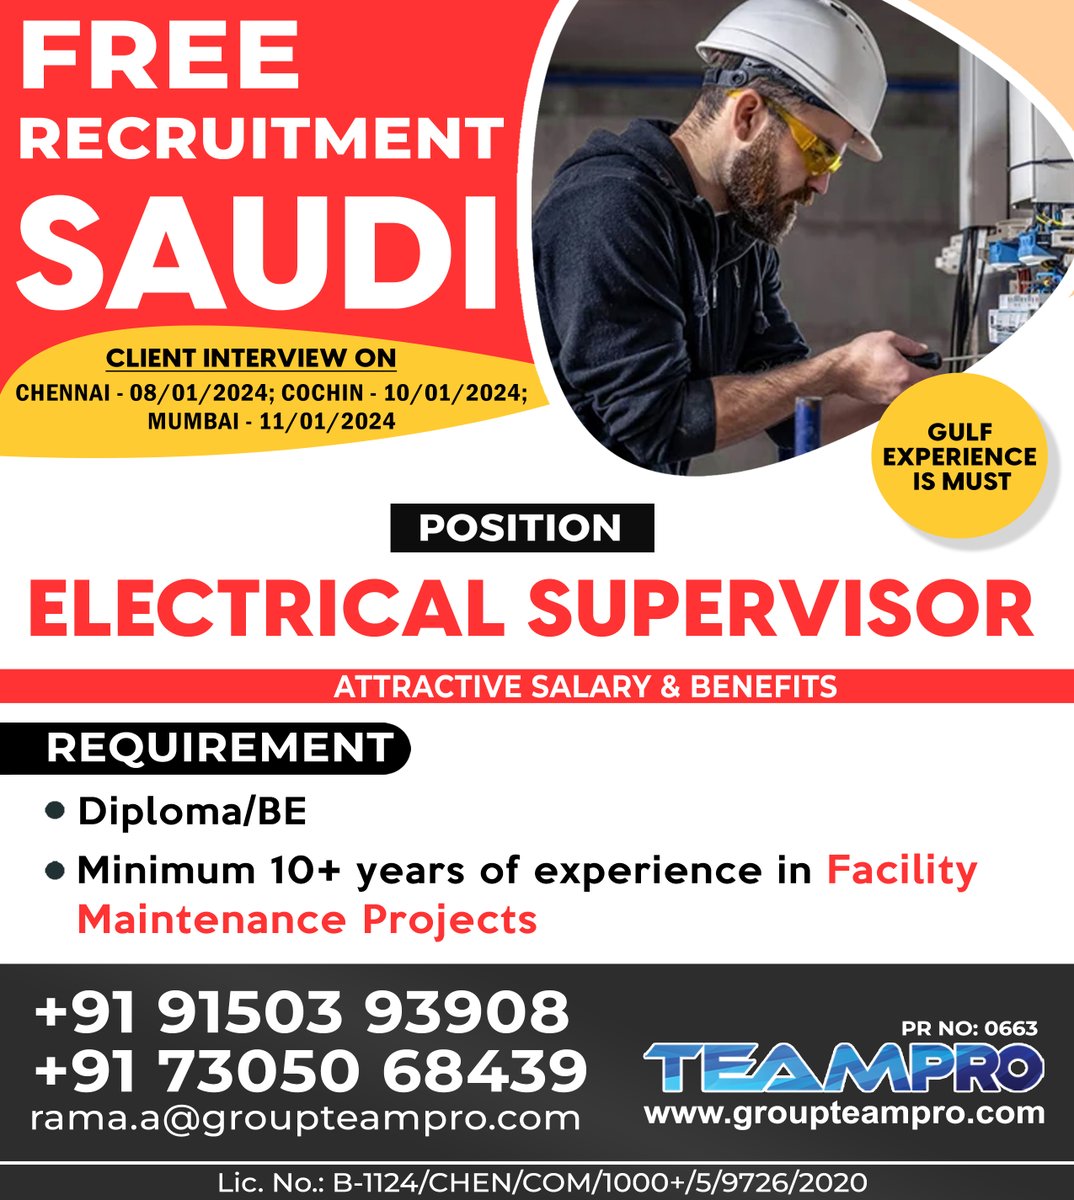 #saudijobs #saudijobseekers #freerecruitment #electricalsupervisor #electrical #engineer #supervisor #gulfexperience #immediatejoiners #shortlistingunderprogress #directinterview